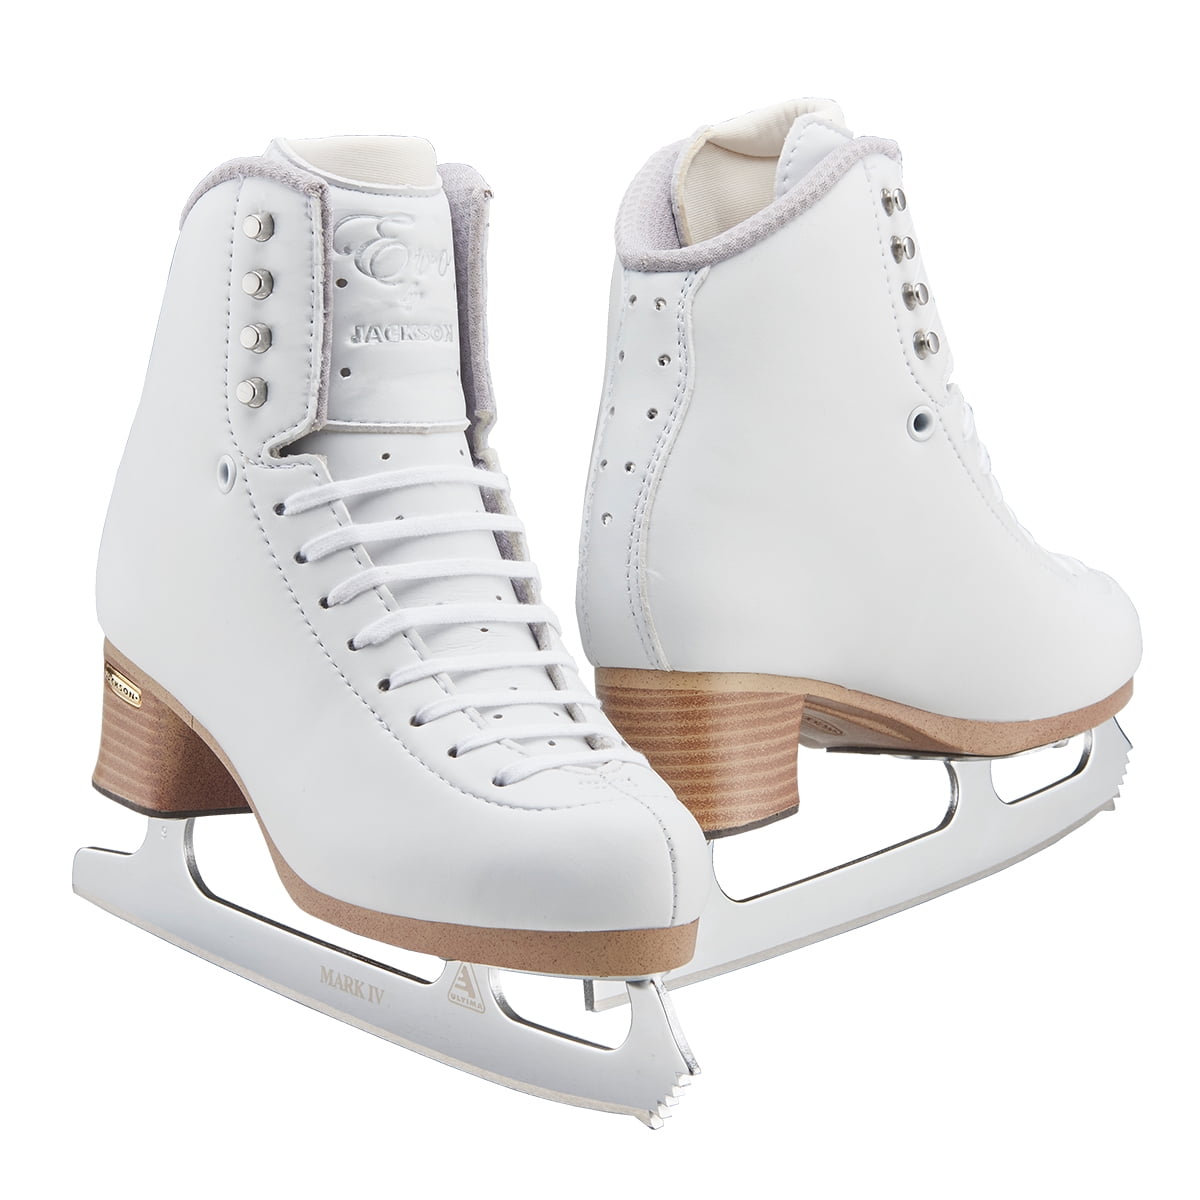 jackson ice skates